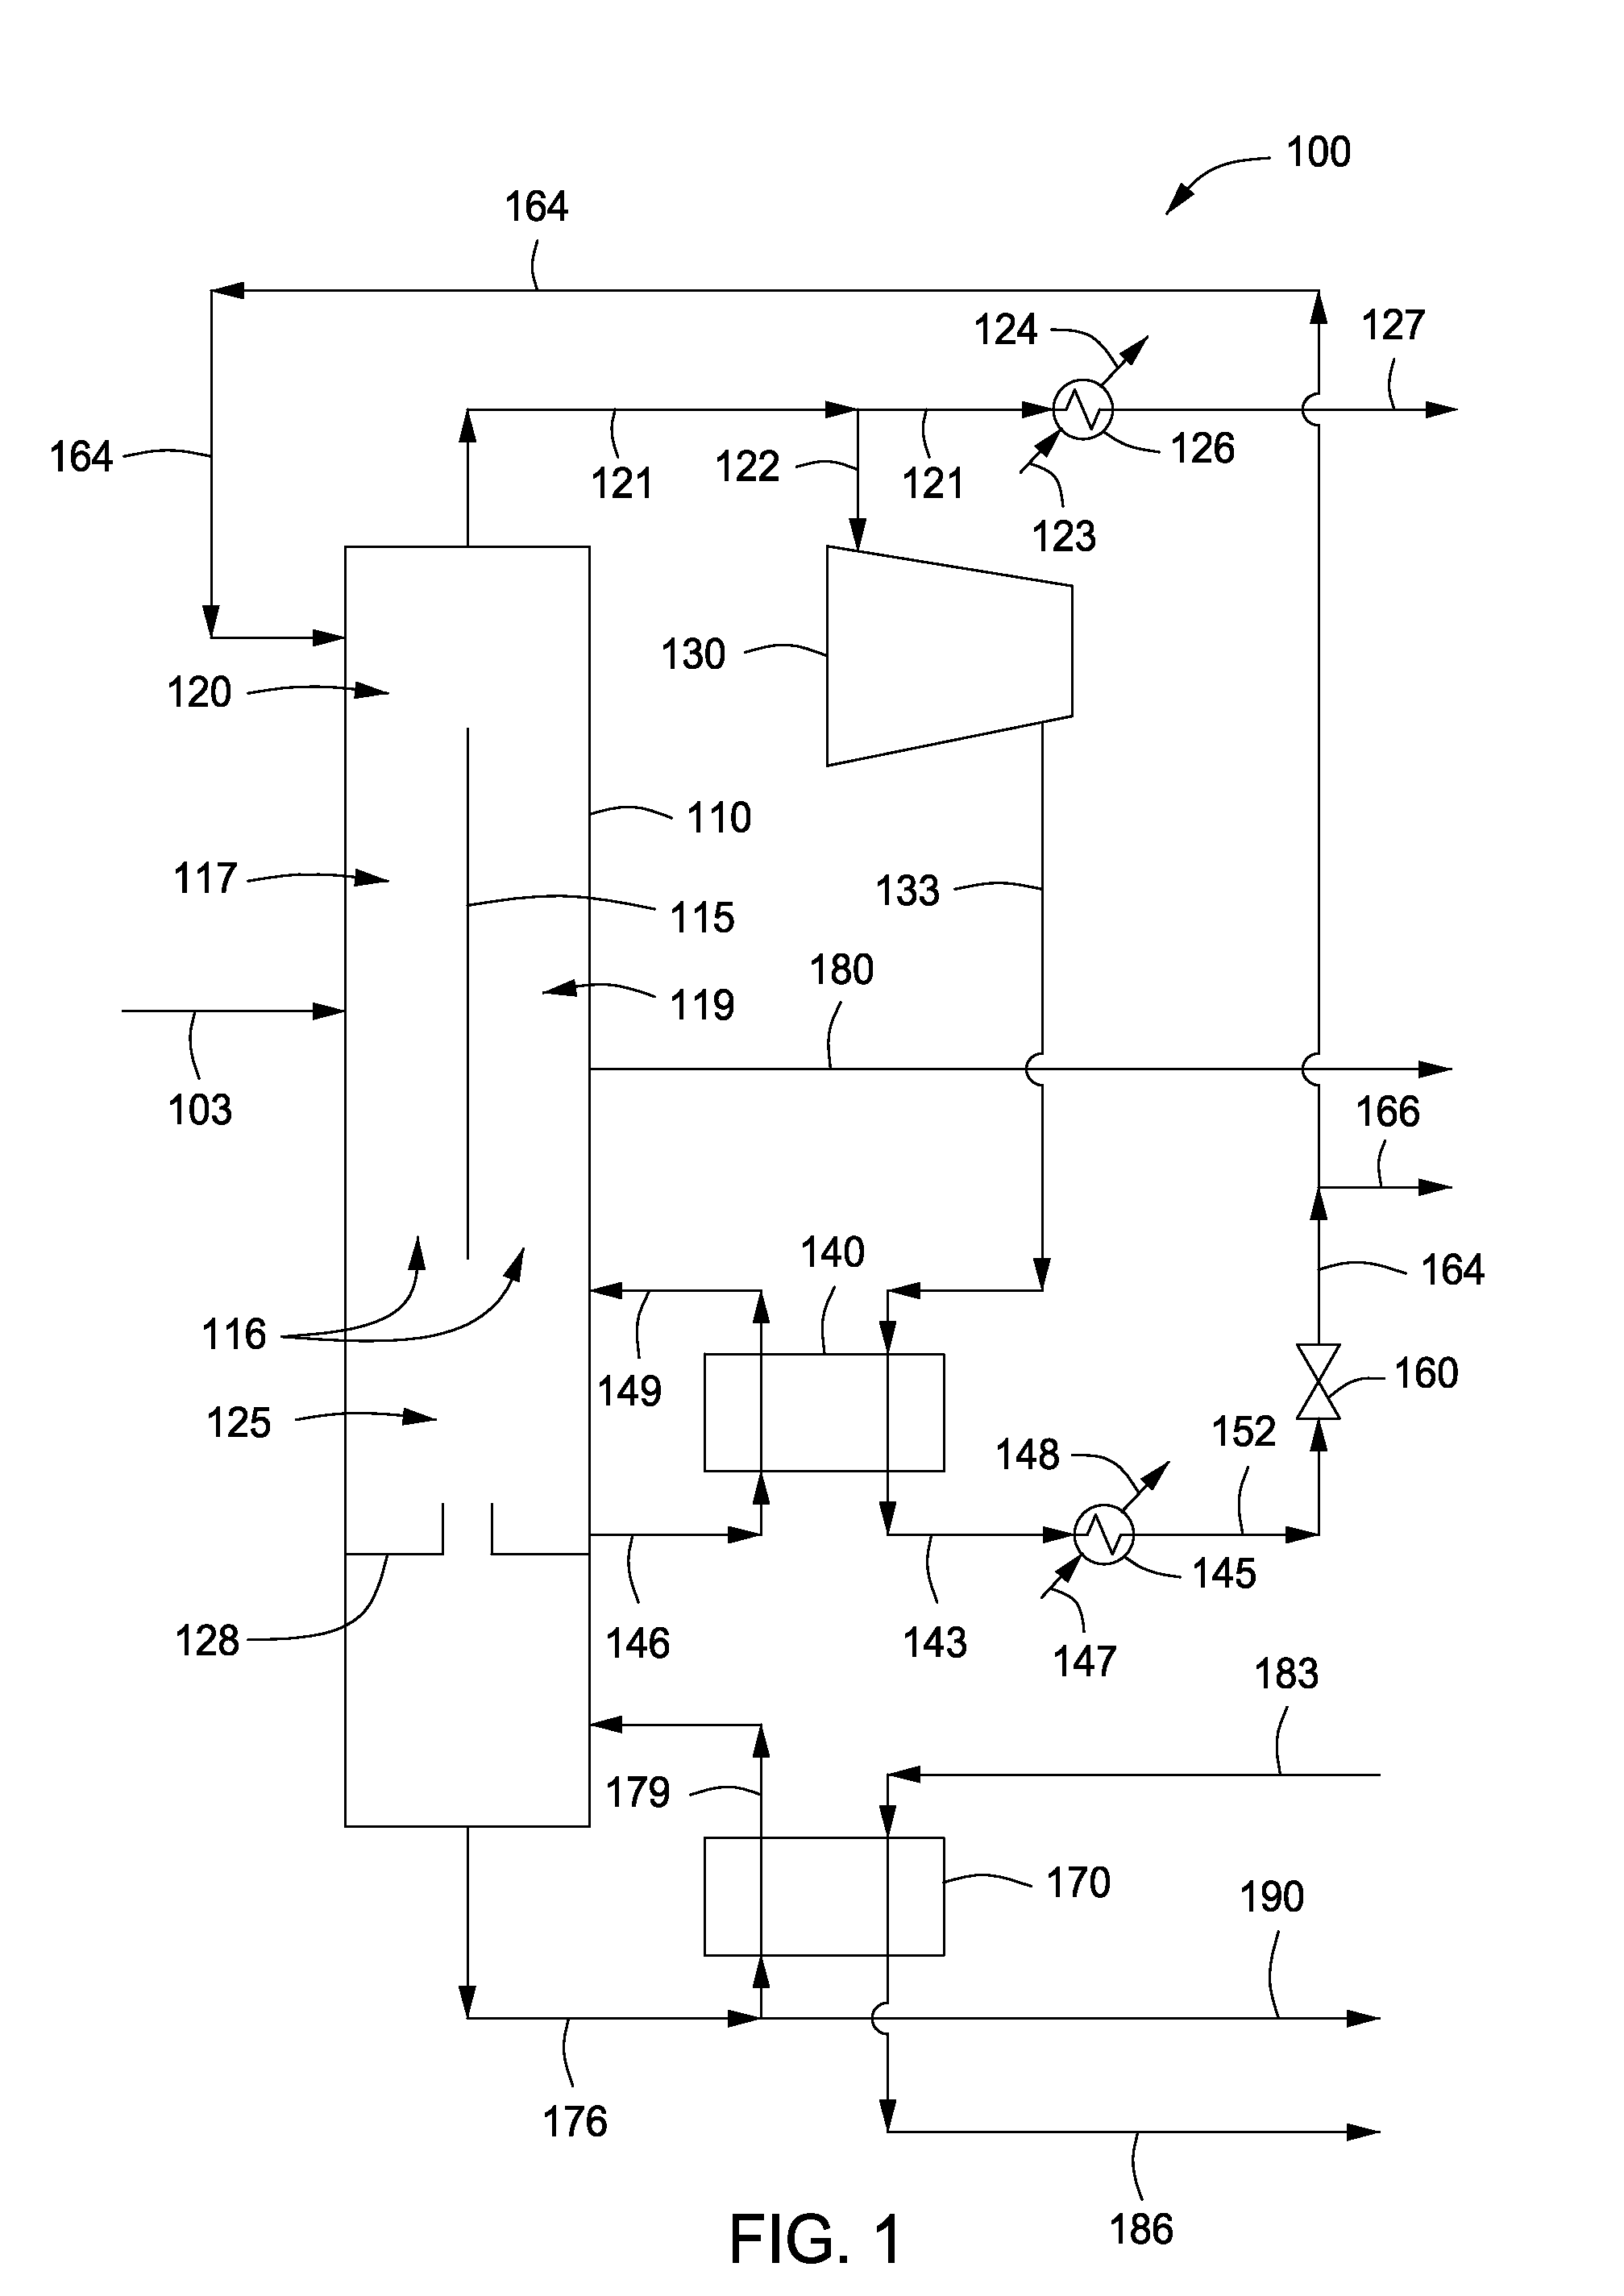 Dividing wall column with a heat pump